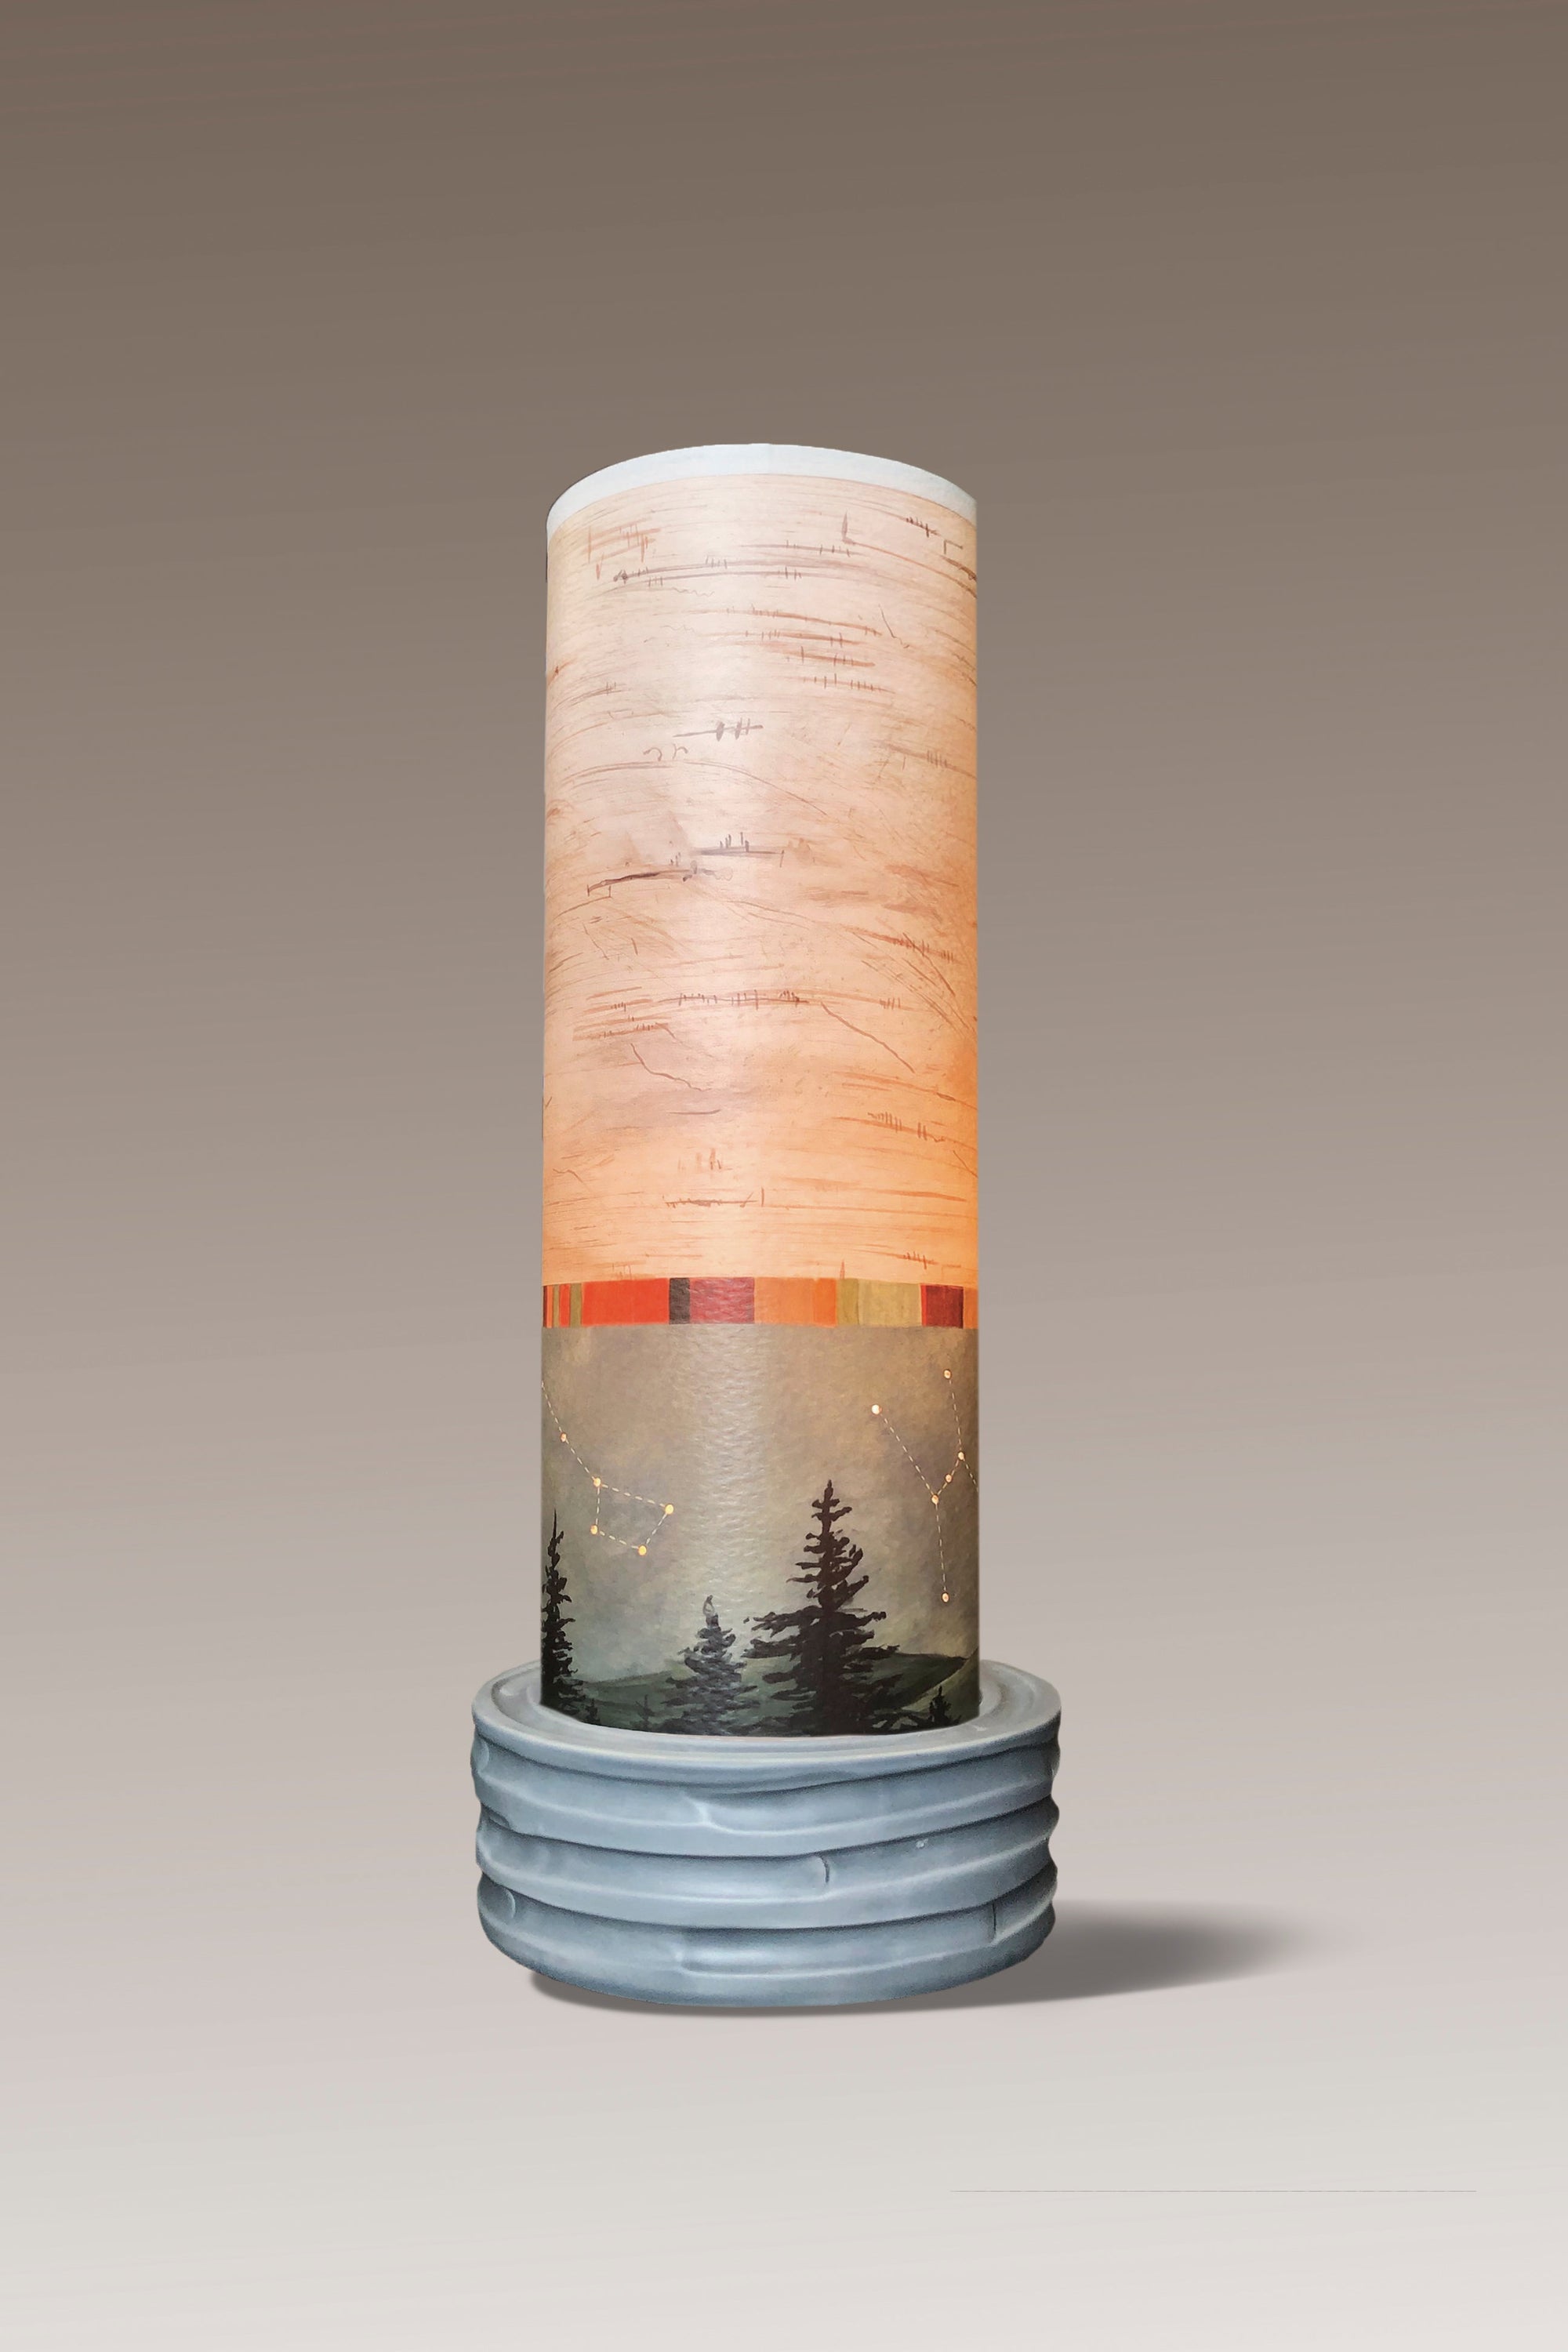 Janna Ugone & Co Luminaires Ceramic Luminaire Accent Lamp with Birch Midnight Shade